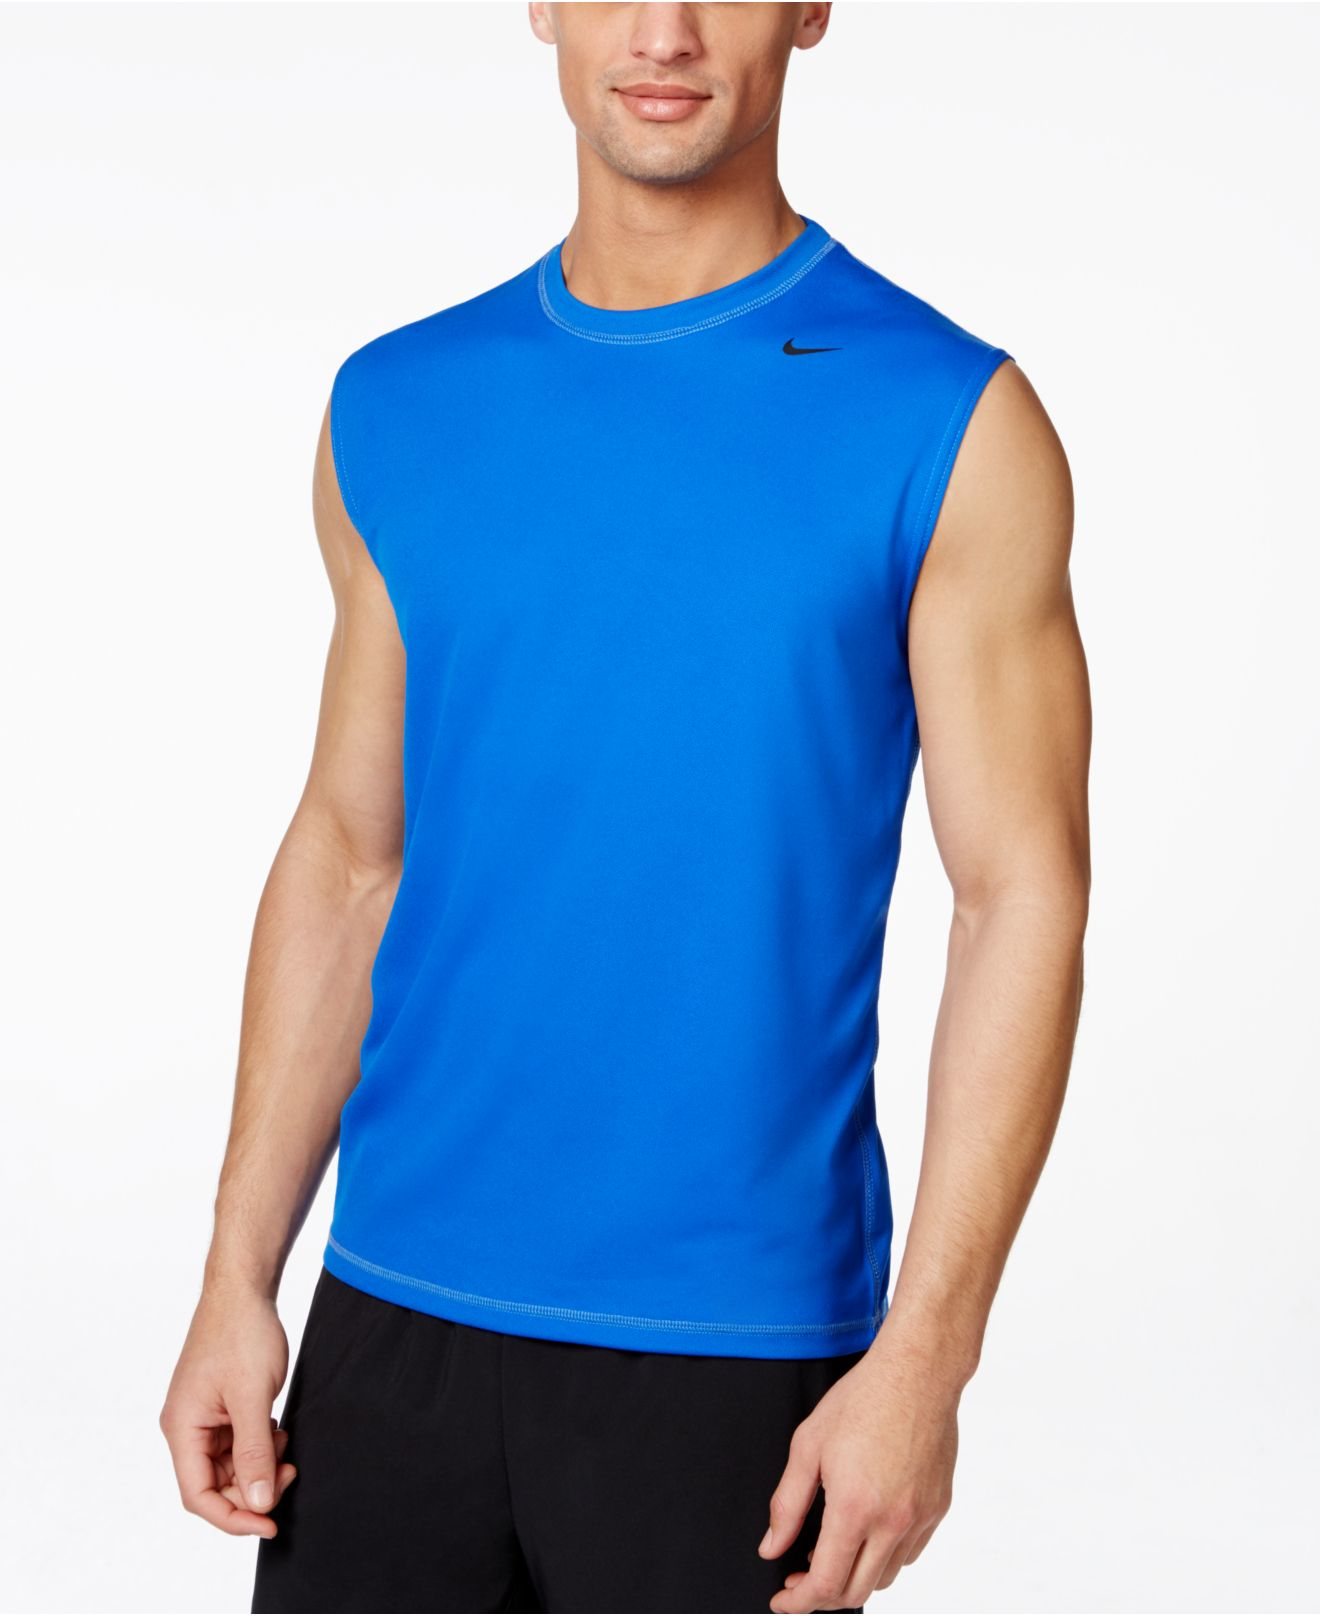 Nike Dri-fit Performance Sleeveless Swim Shirt in Blue for Men